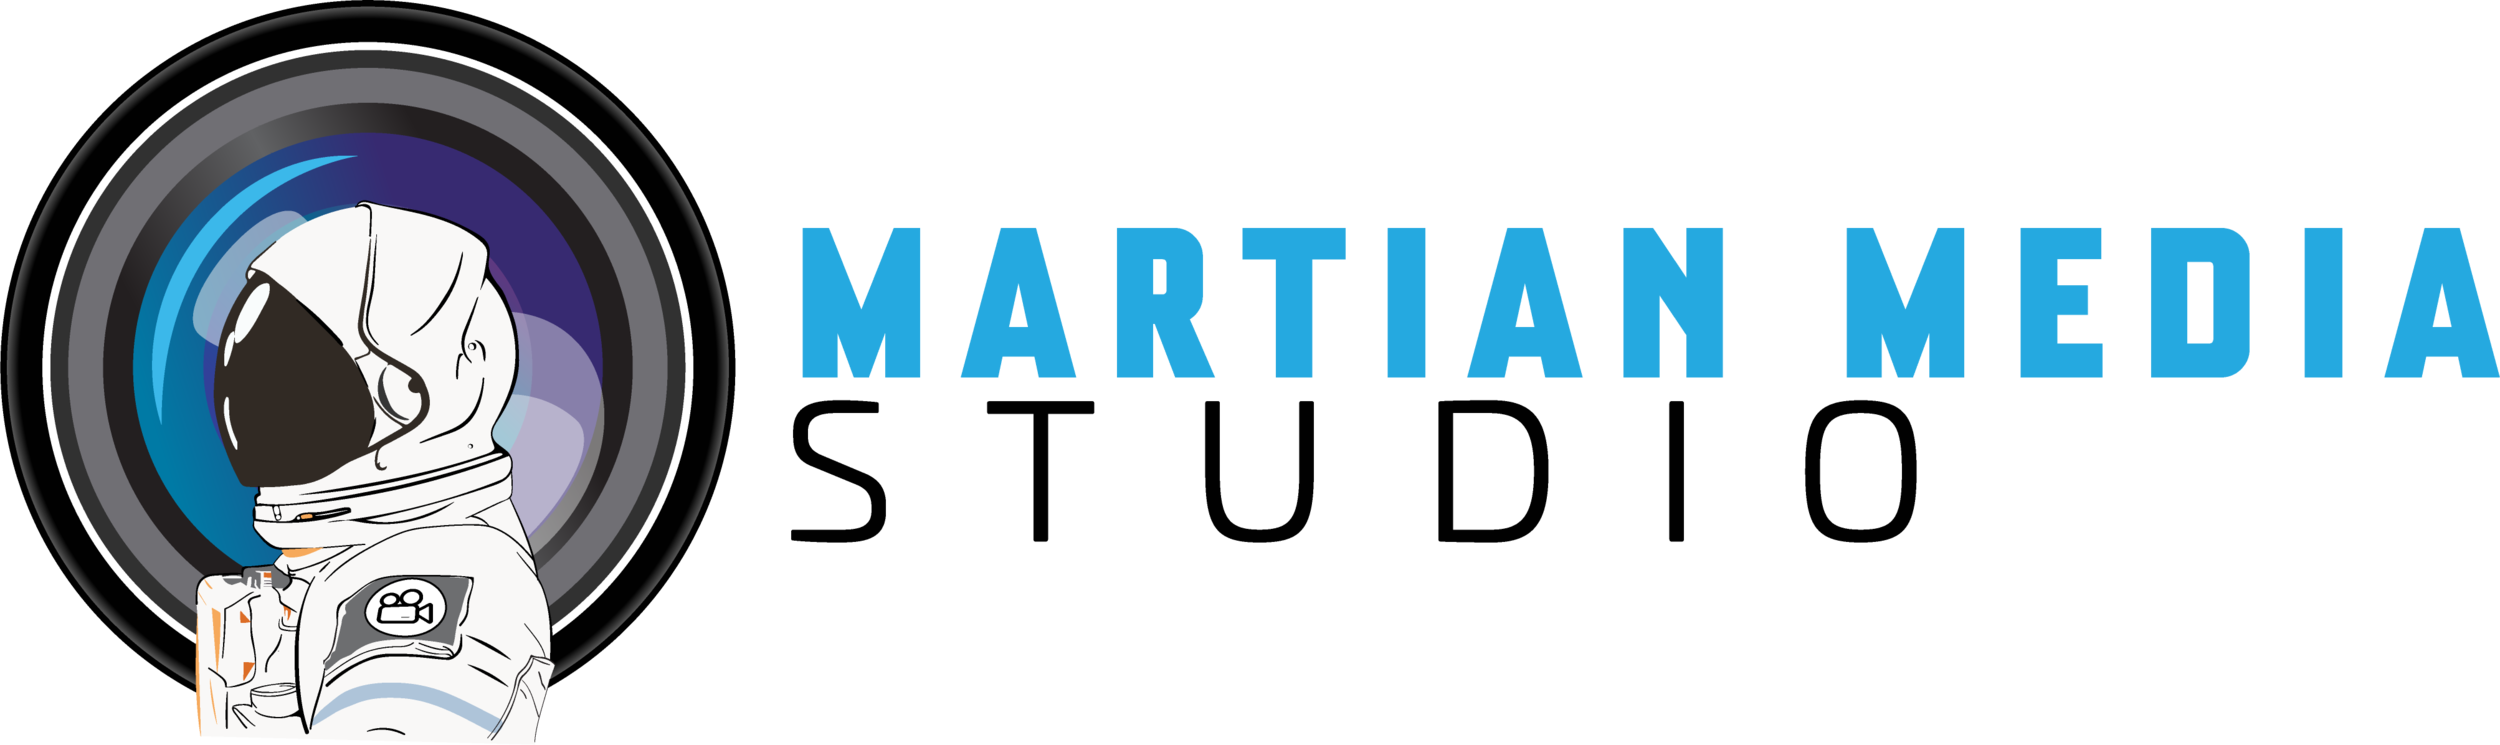 Martian media studio